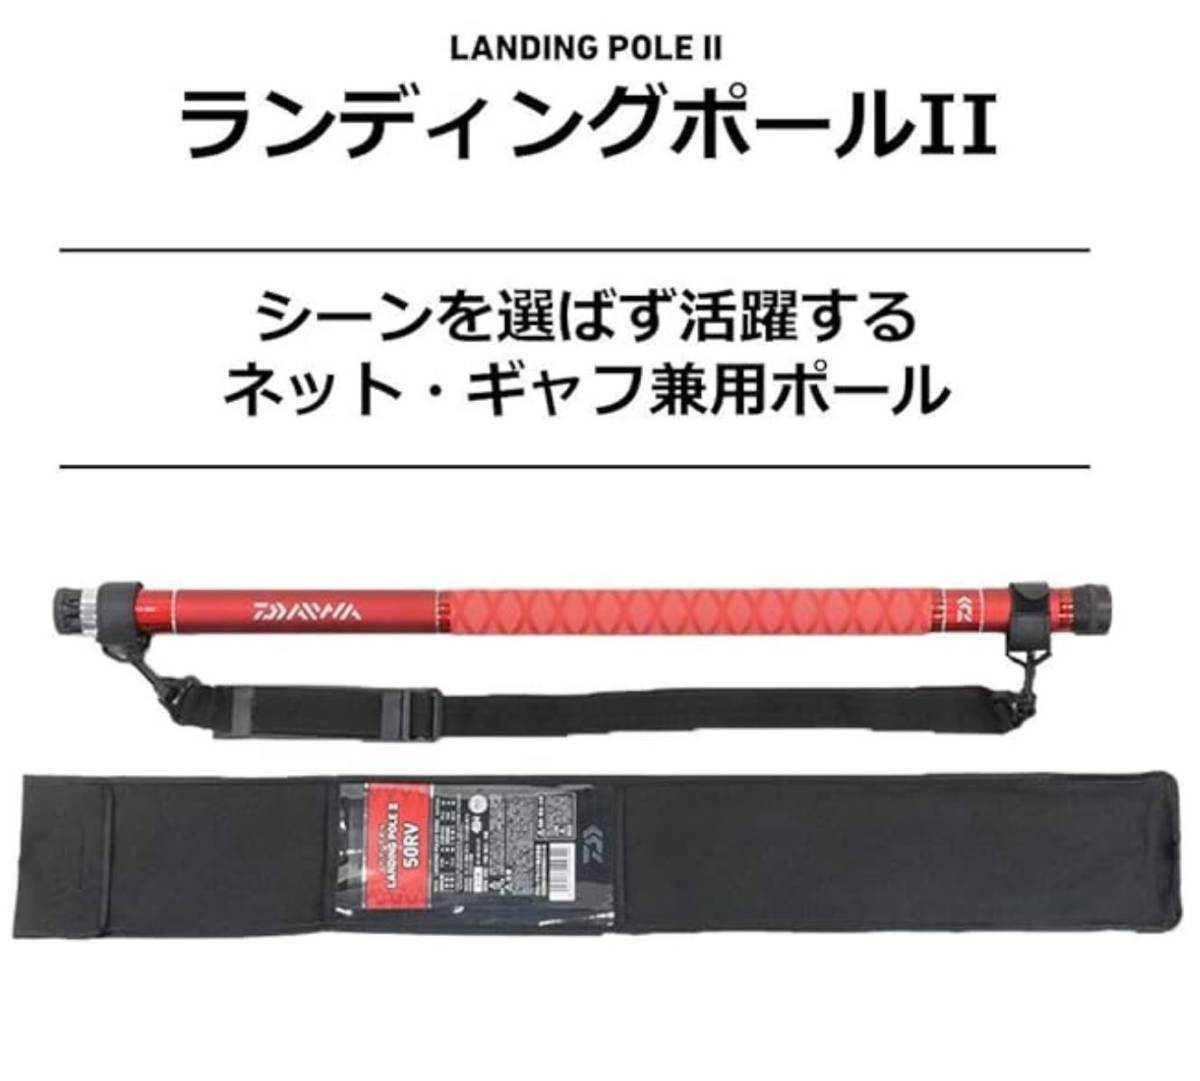 * new goods unused * Daiwa Daiwa sphere. pattern landing paul (pole) 2 50RV red color limitation 